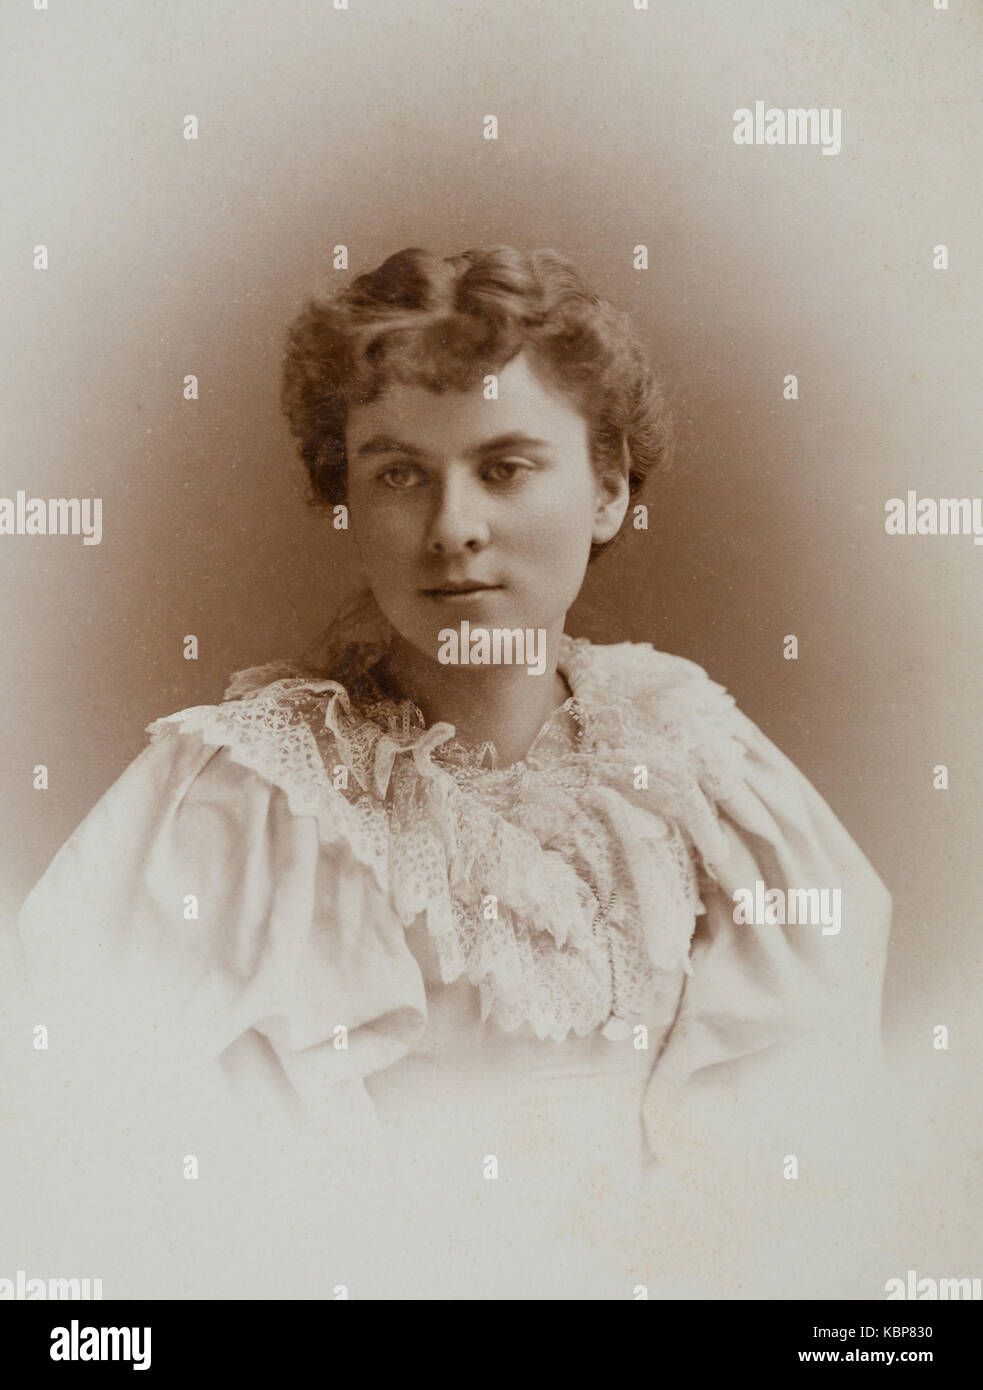 American archive monochrome studio portrait photograph of young woman ...